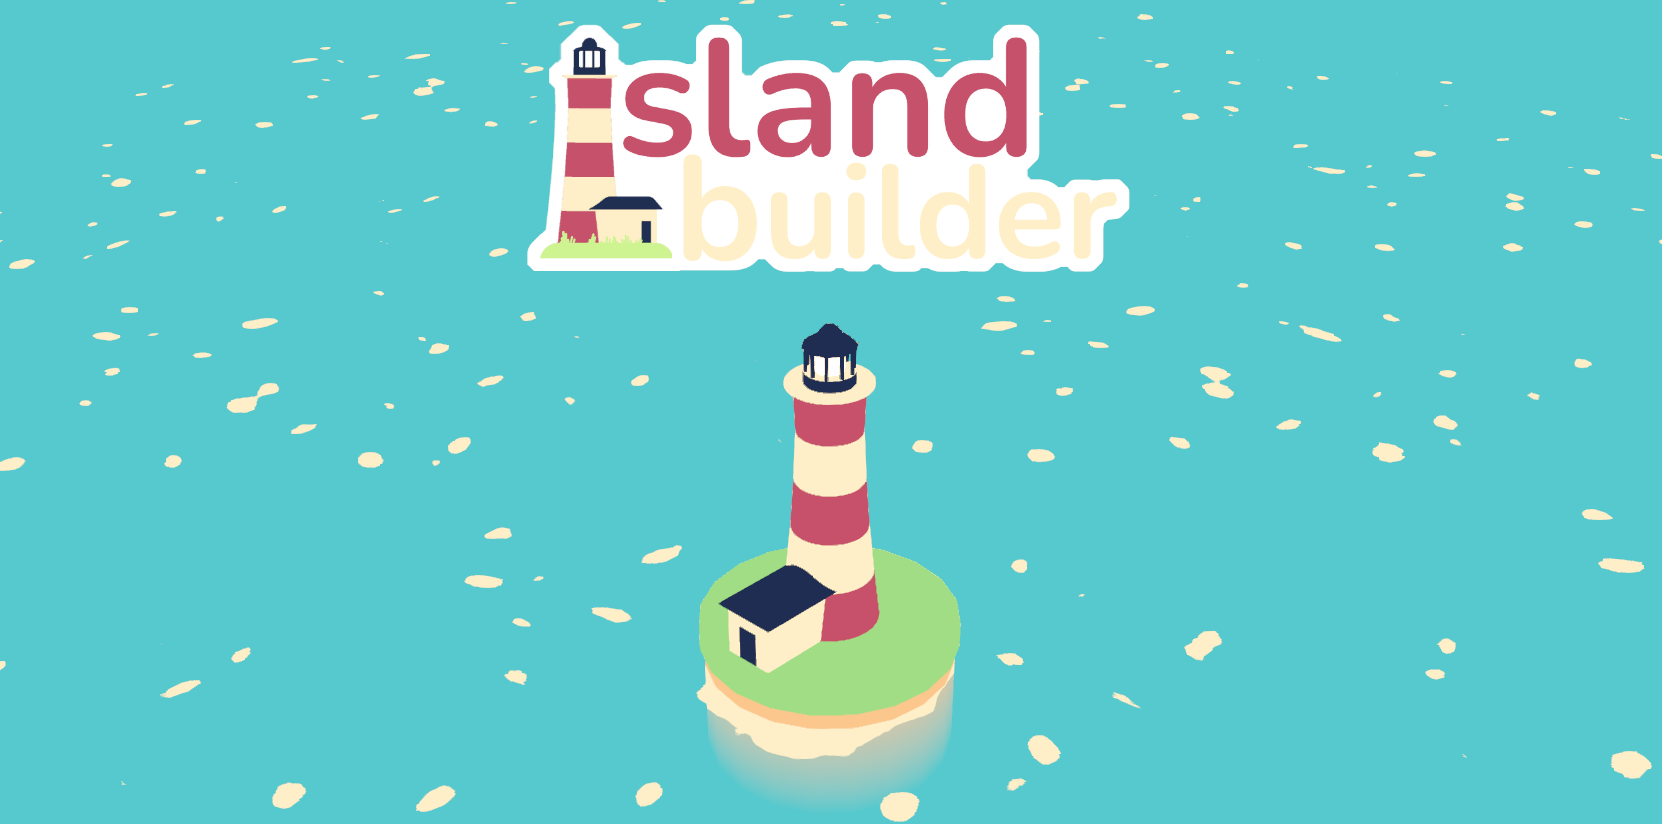 Island builder